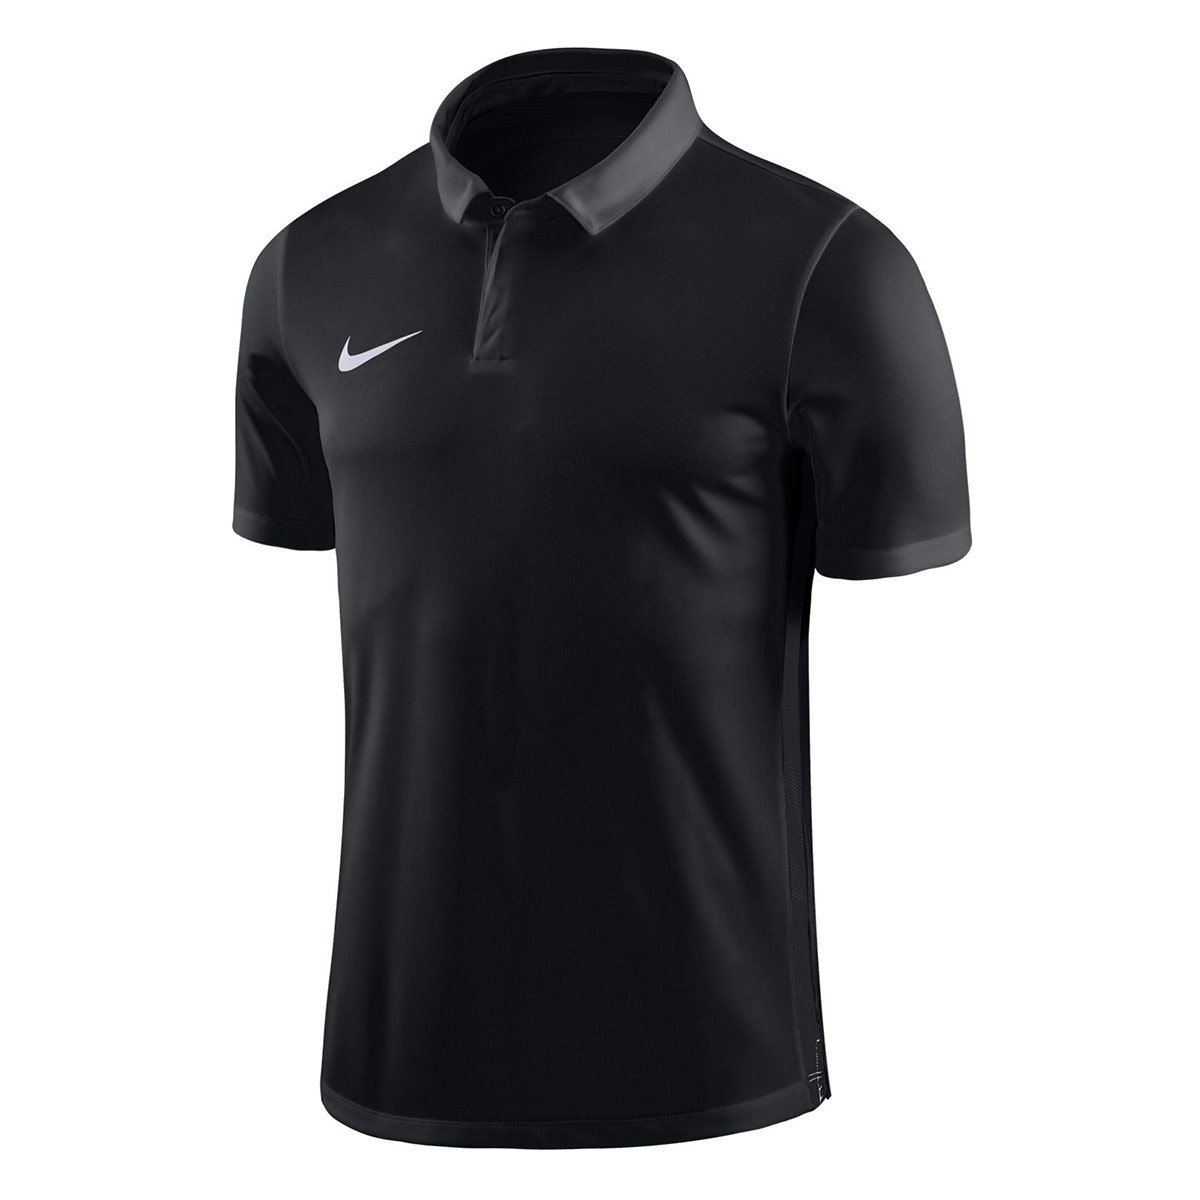 Polo Nike Academy 18 m/c Black-Anthracite - Tienda de fútbol Fútbol Emotion